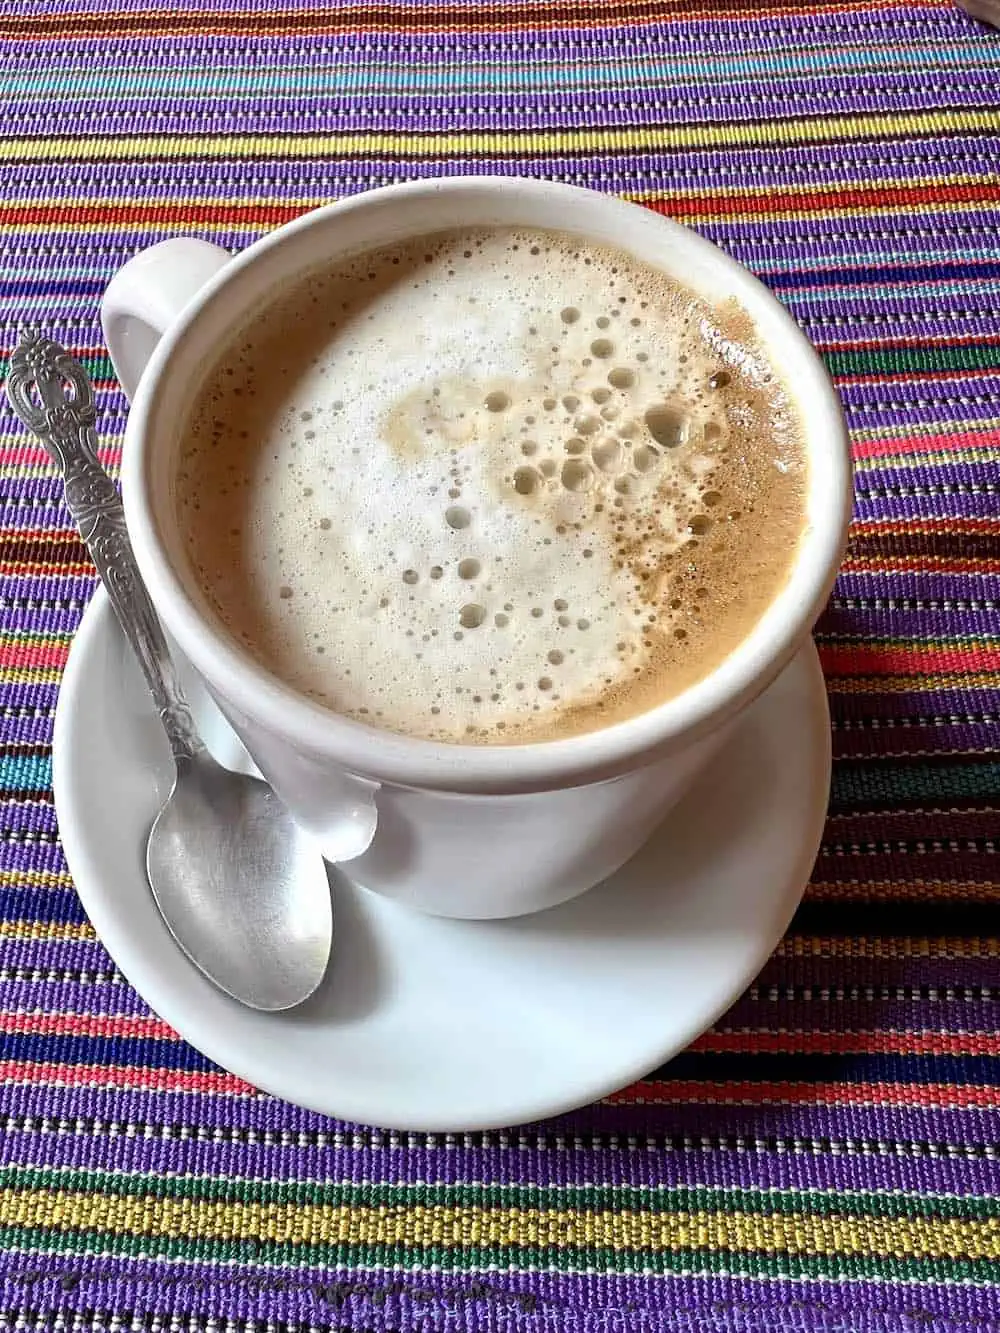 A mug of Guatemalan coffee on a woven tablecloth. 